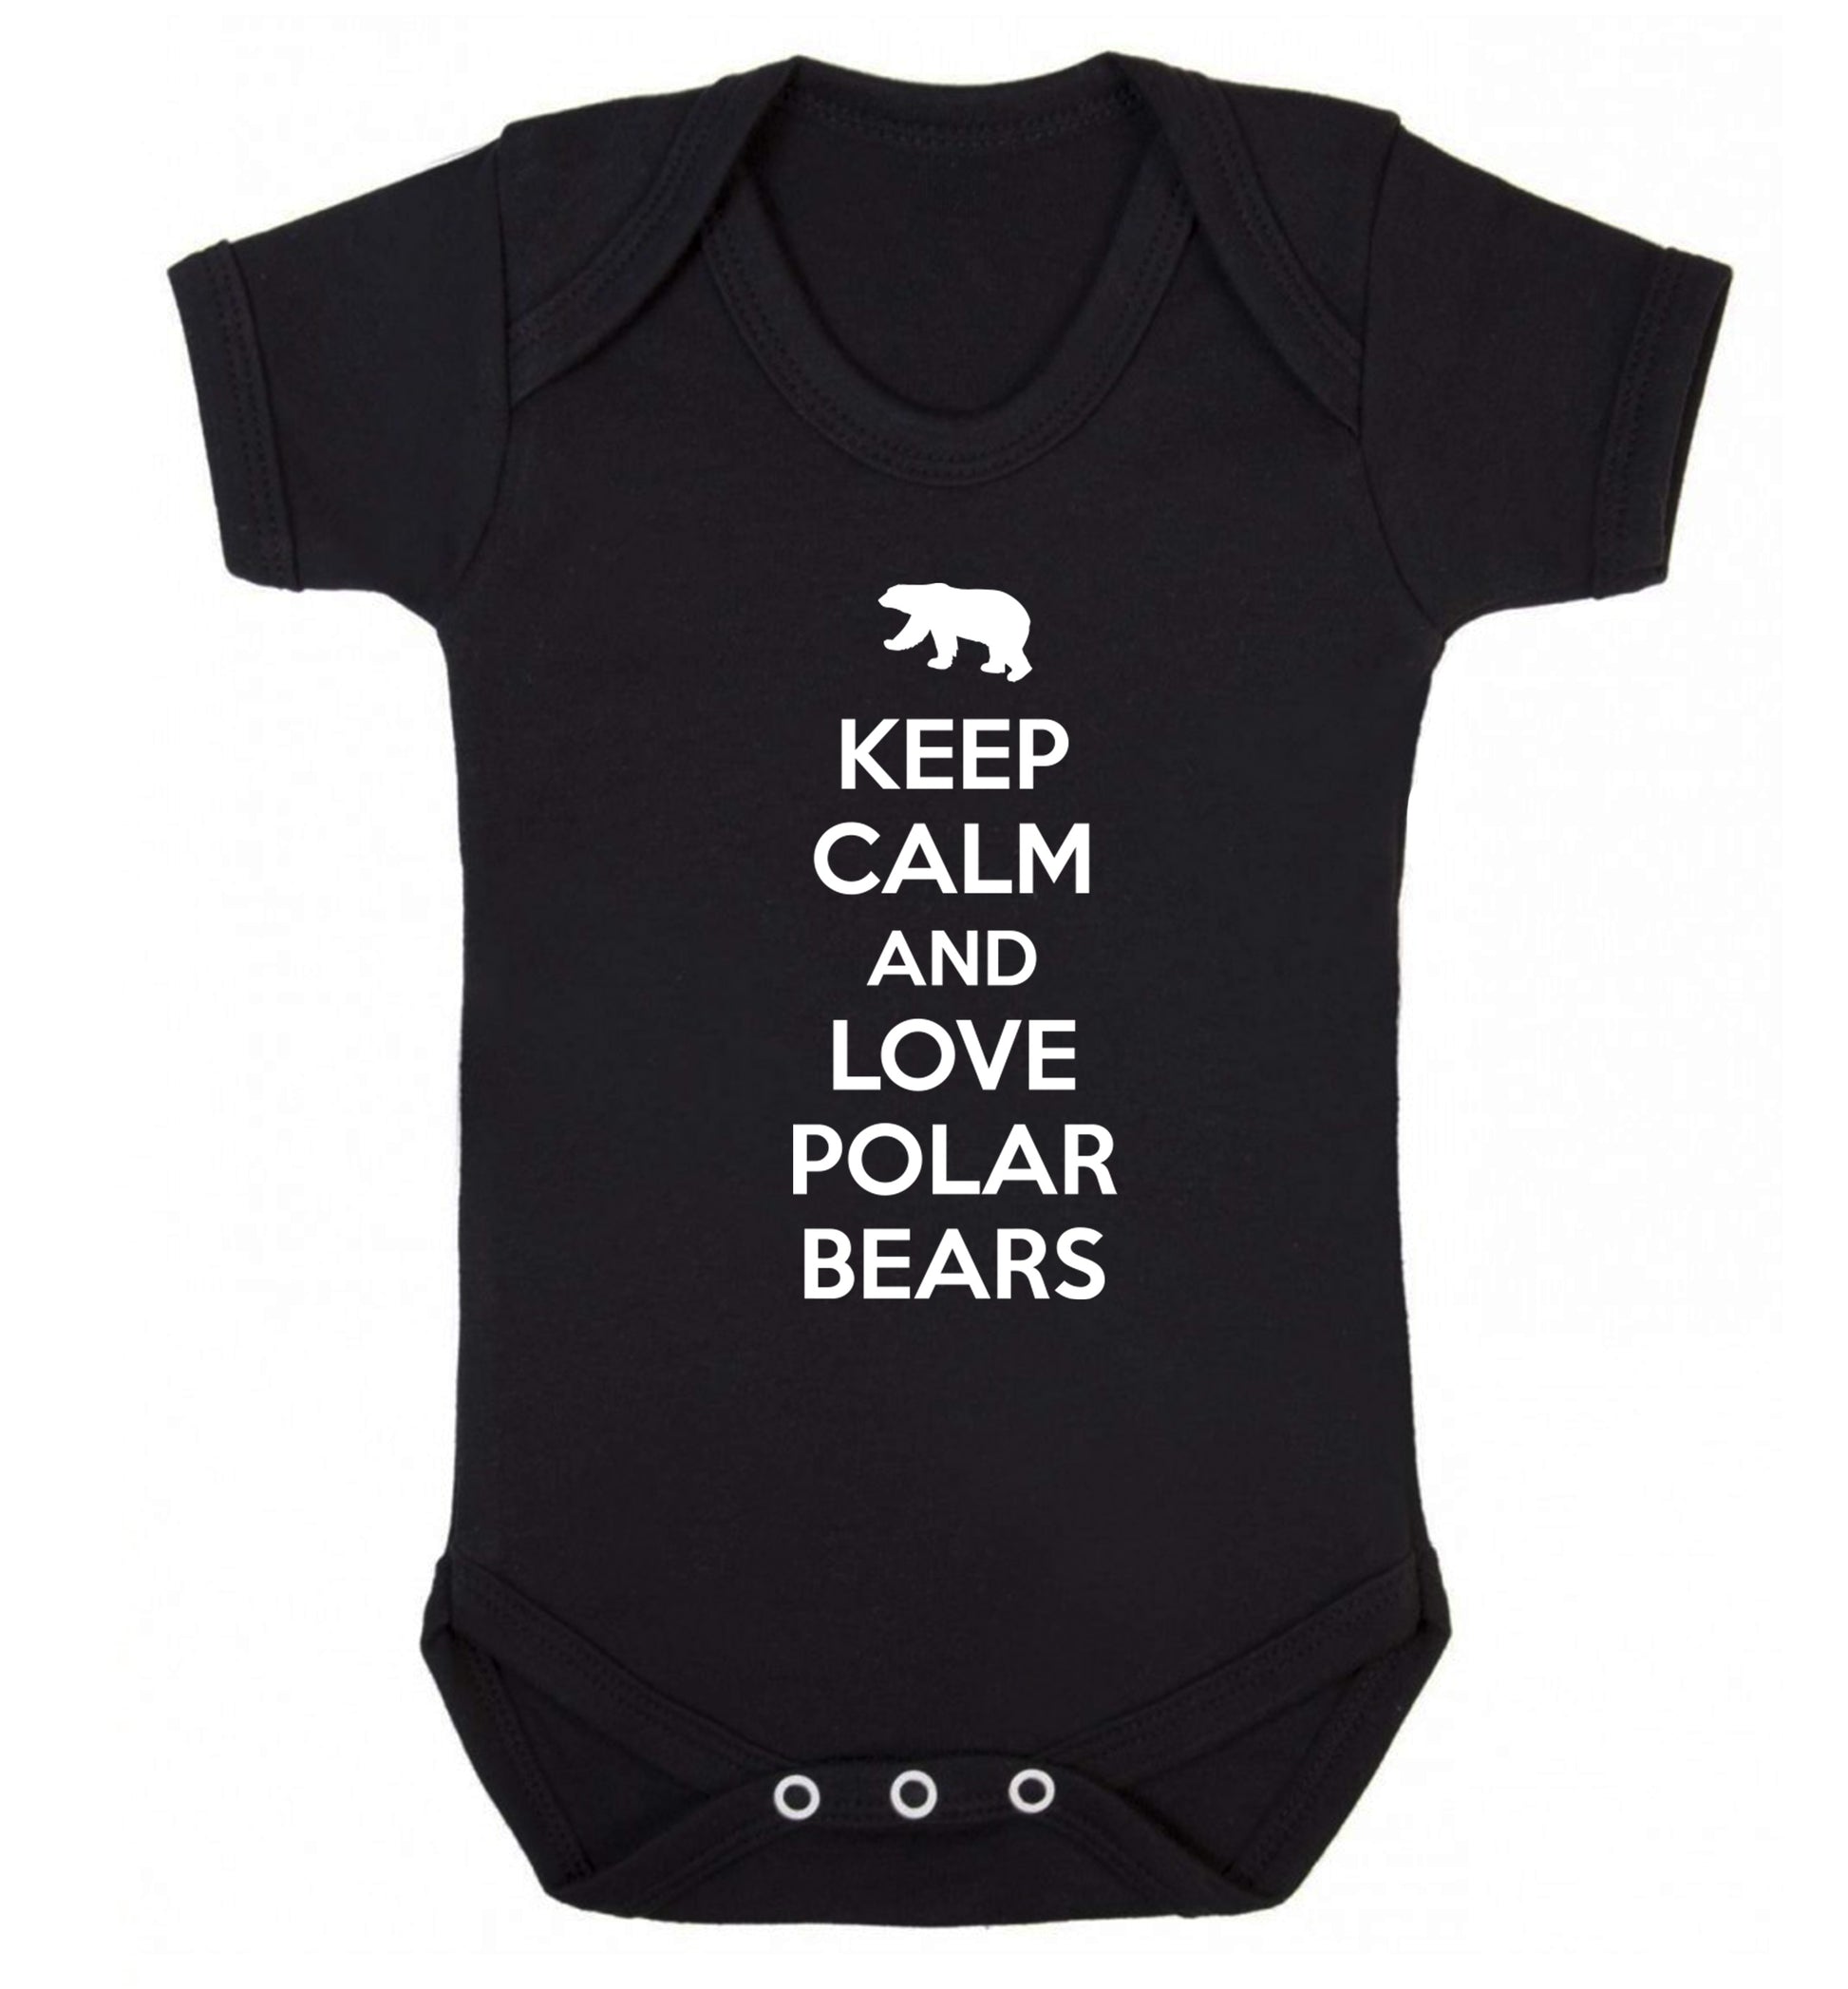 Keep calm and love polar bears Baby Vest black 18-24 months